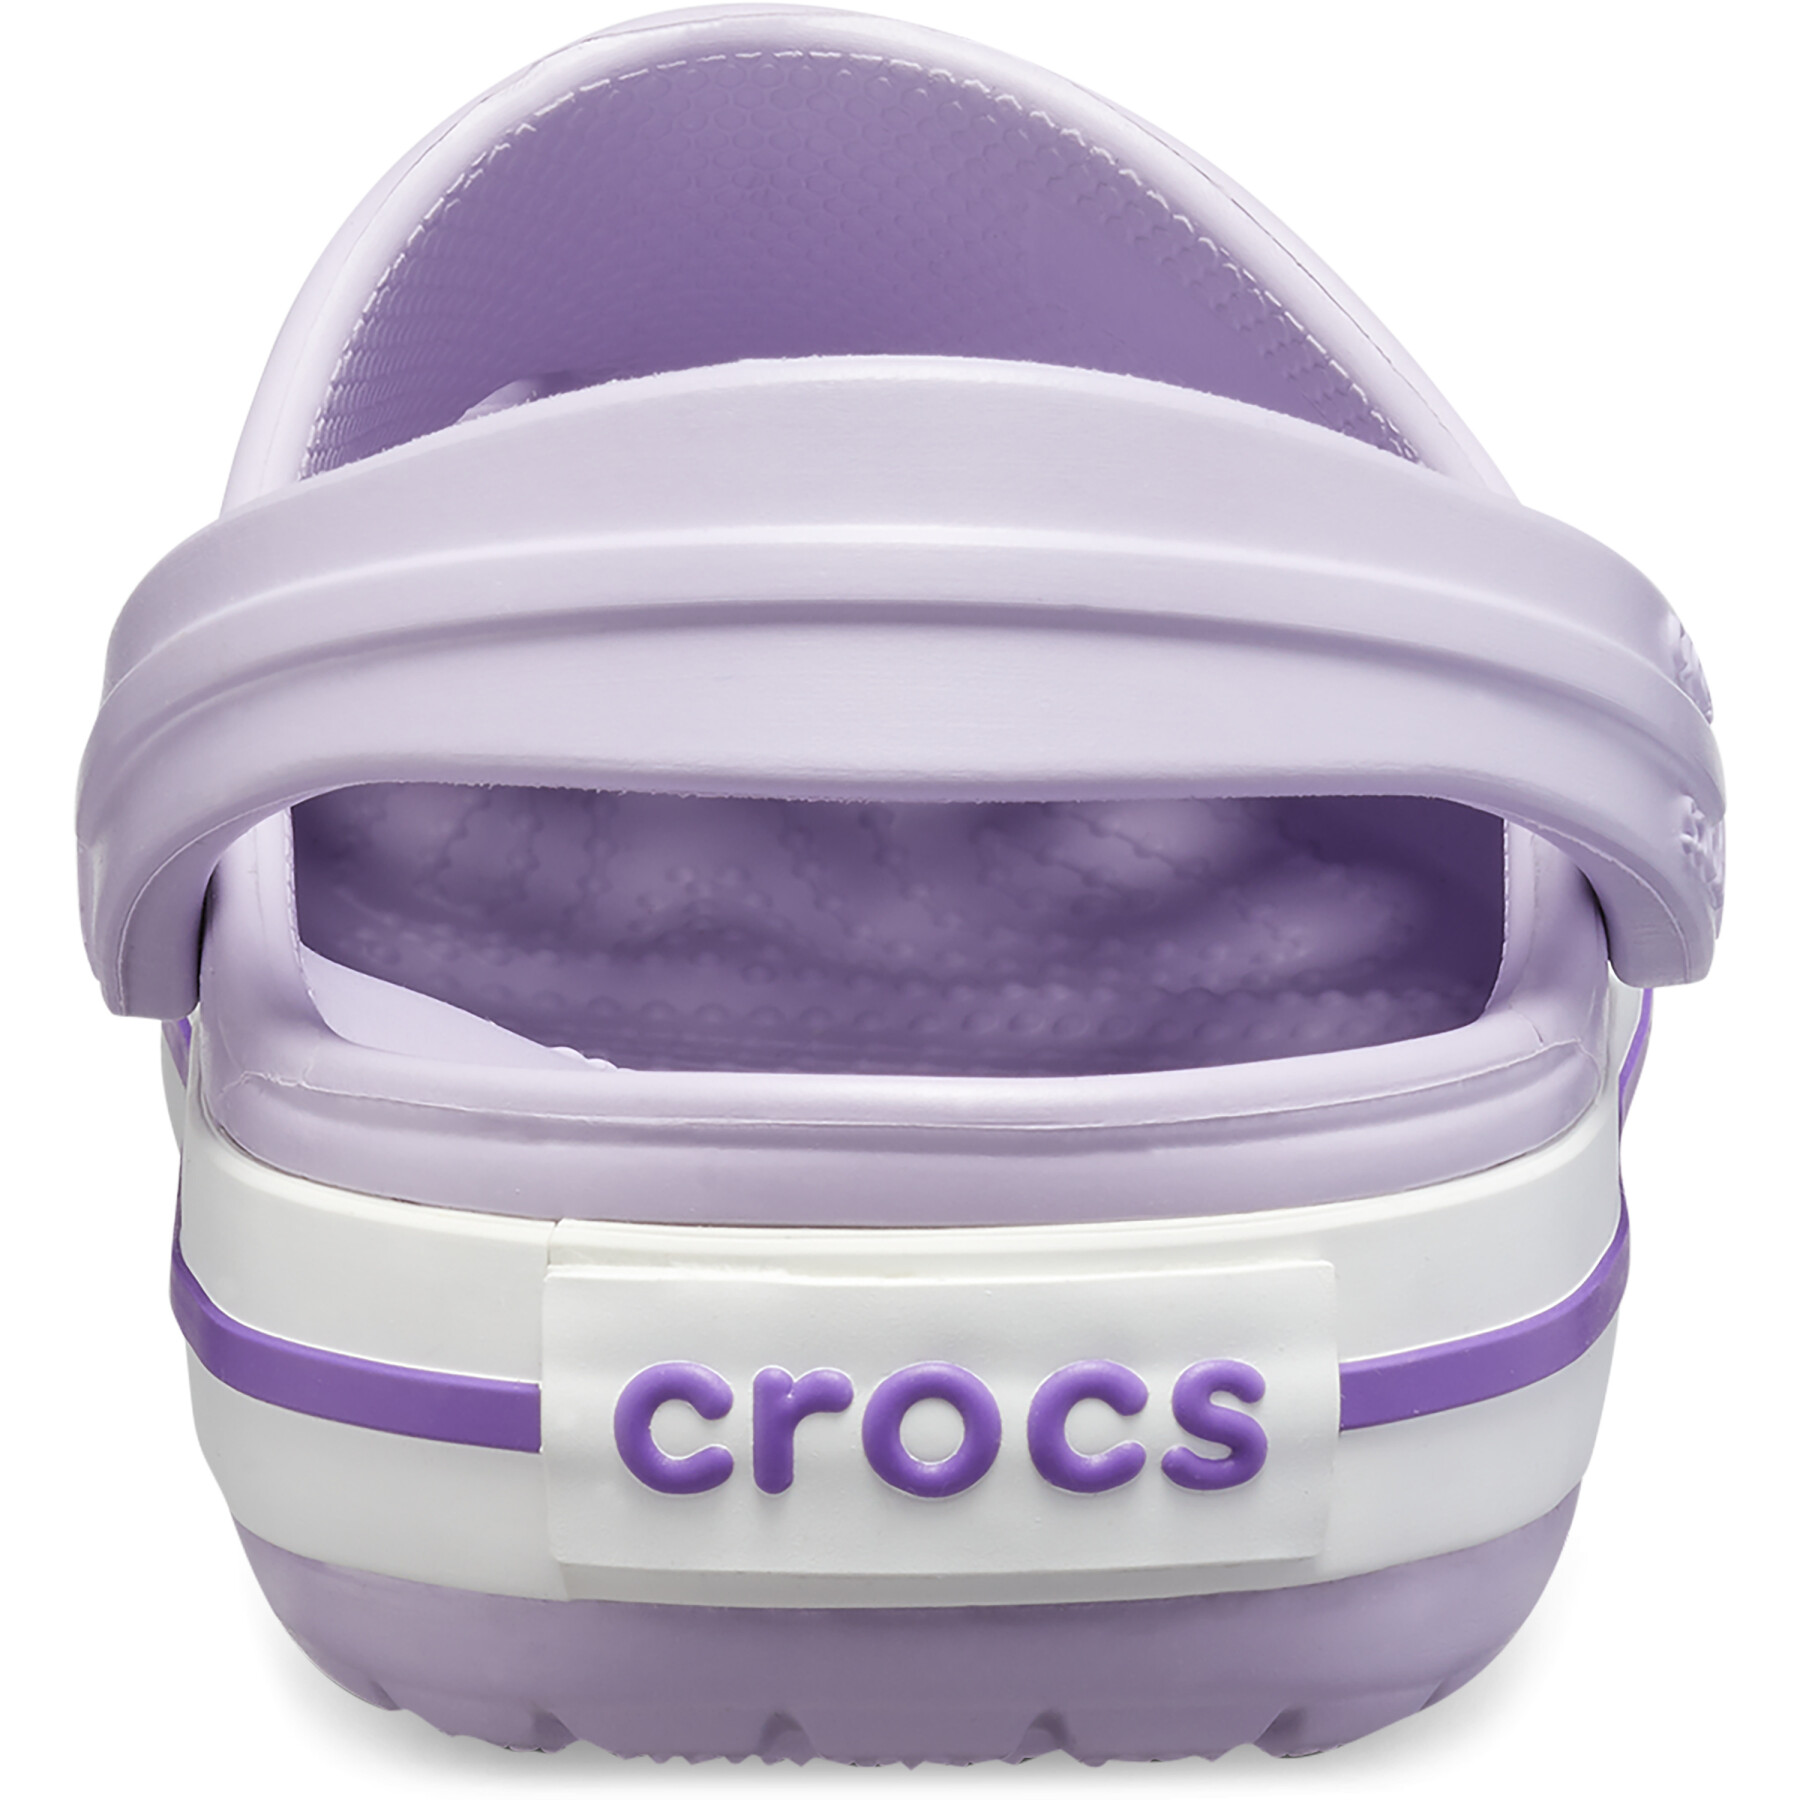 Zoccoli per bambini Crocs Crocband T